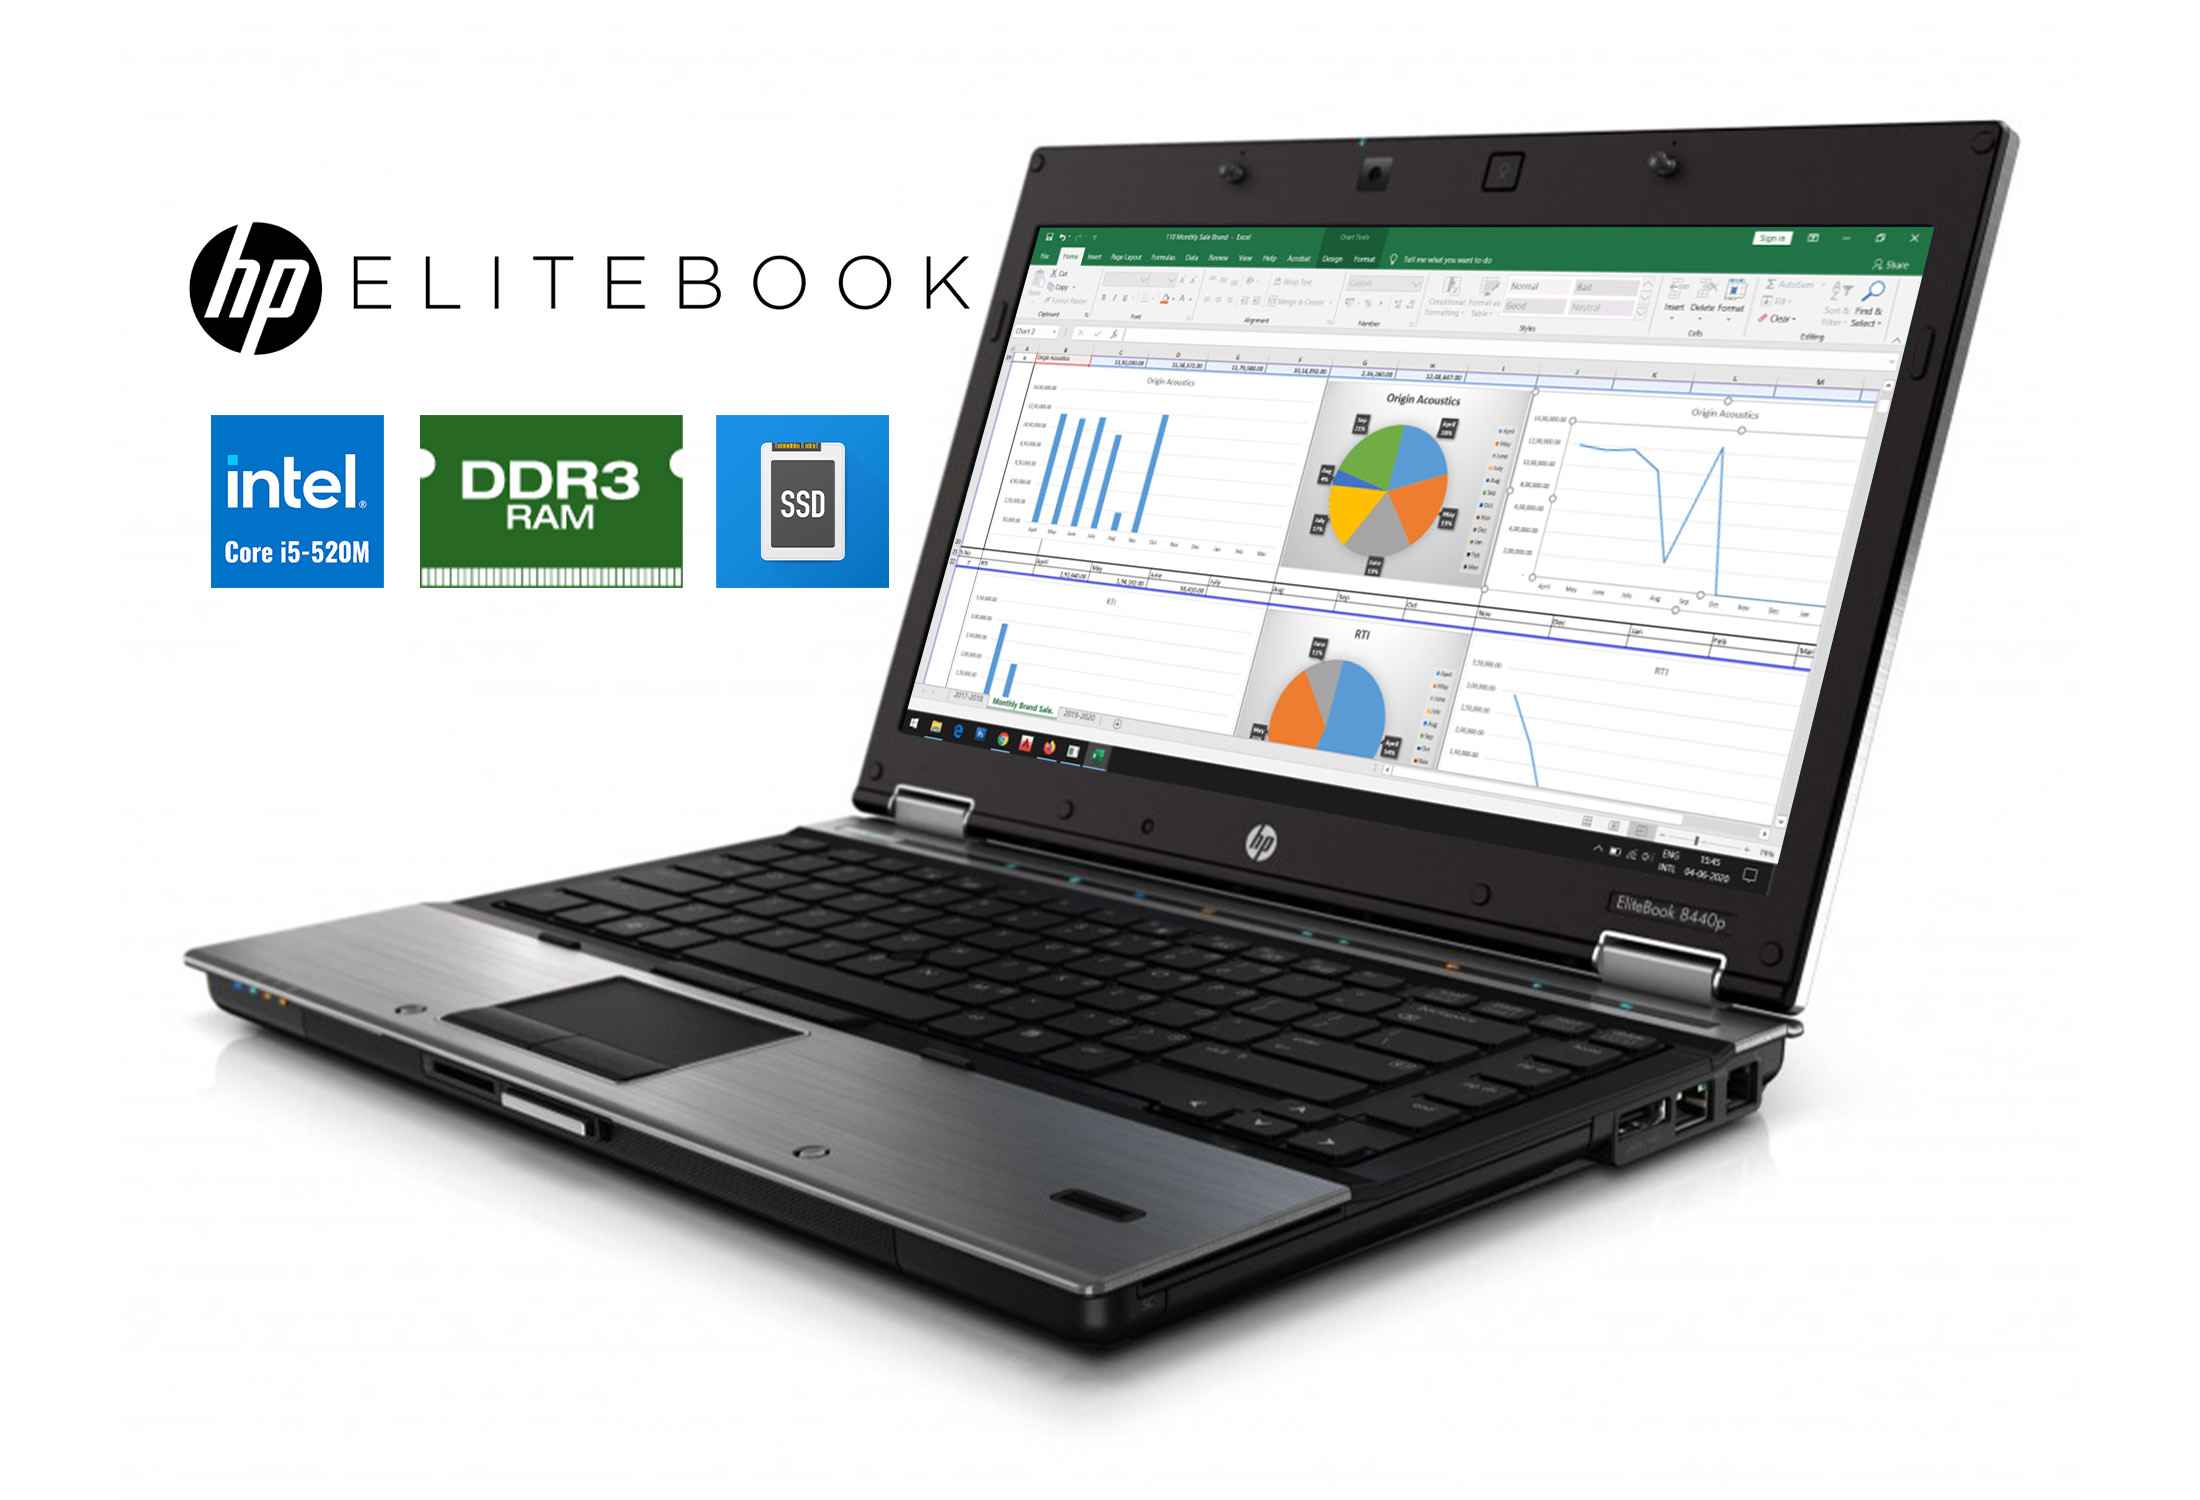 HP EliteBook 8440p core i5-520M DDR3 SSD 1600x900